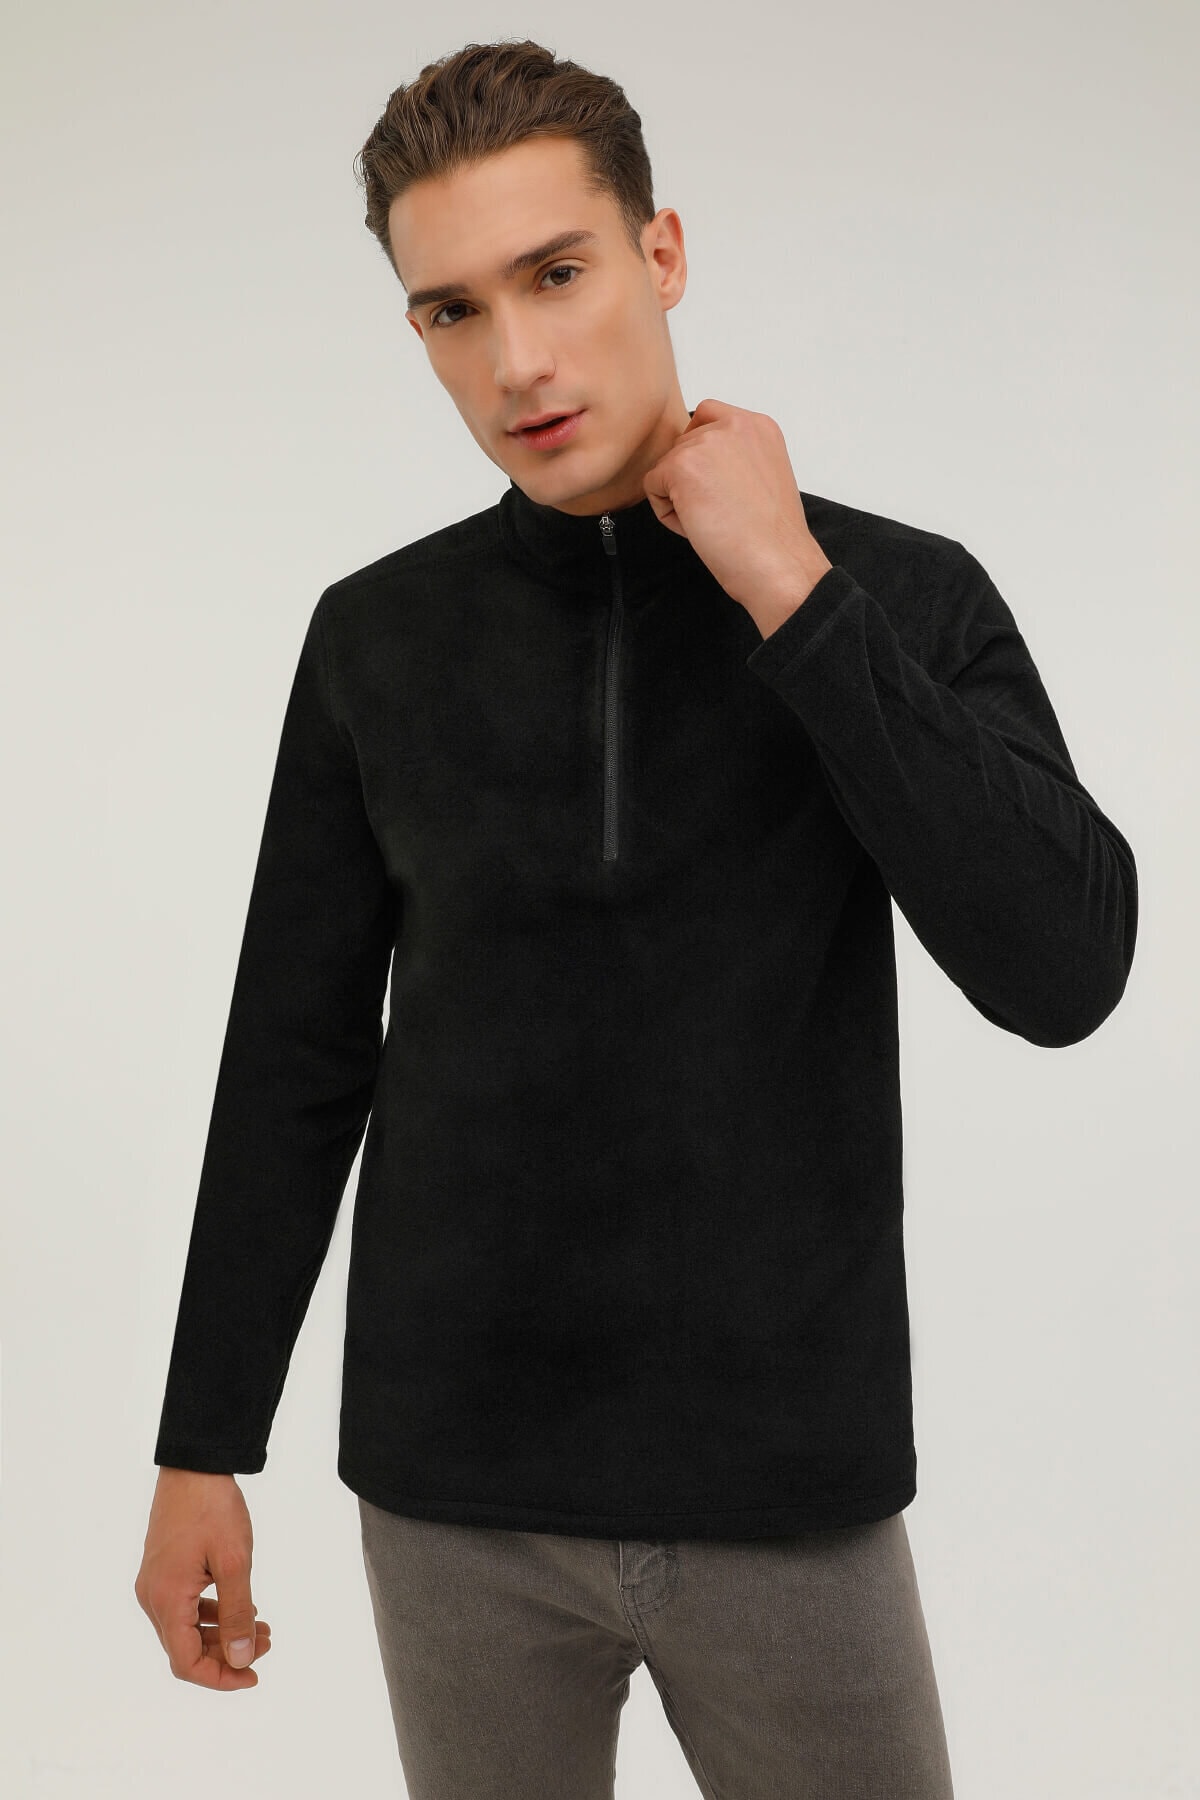 KINETIX Men's Black Fleece 2pr Zipper Collar Fleece